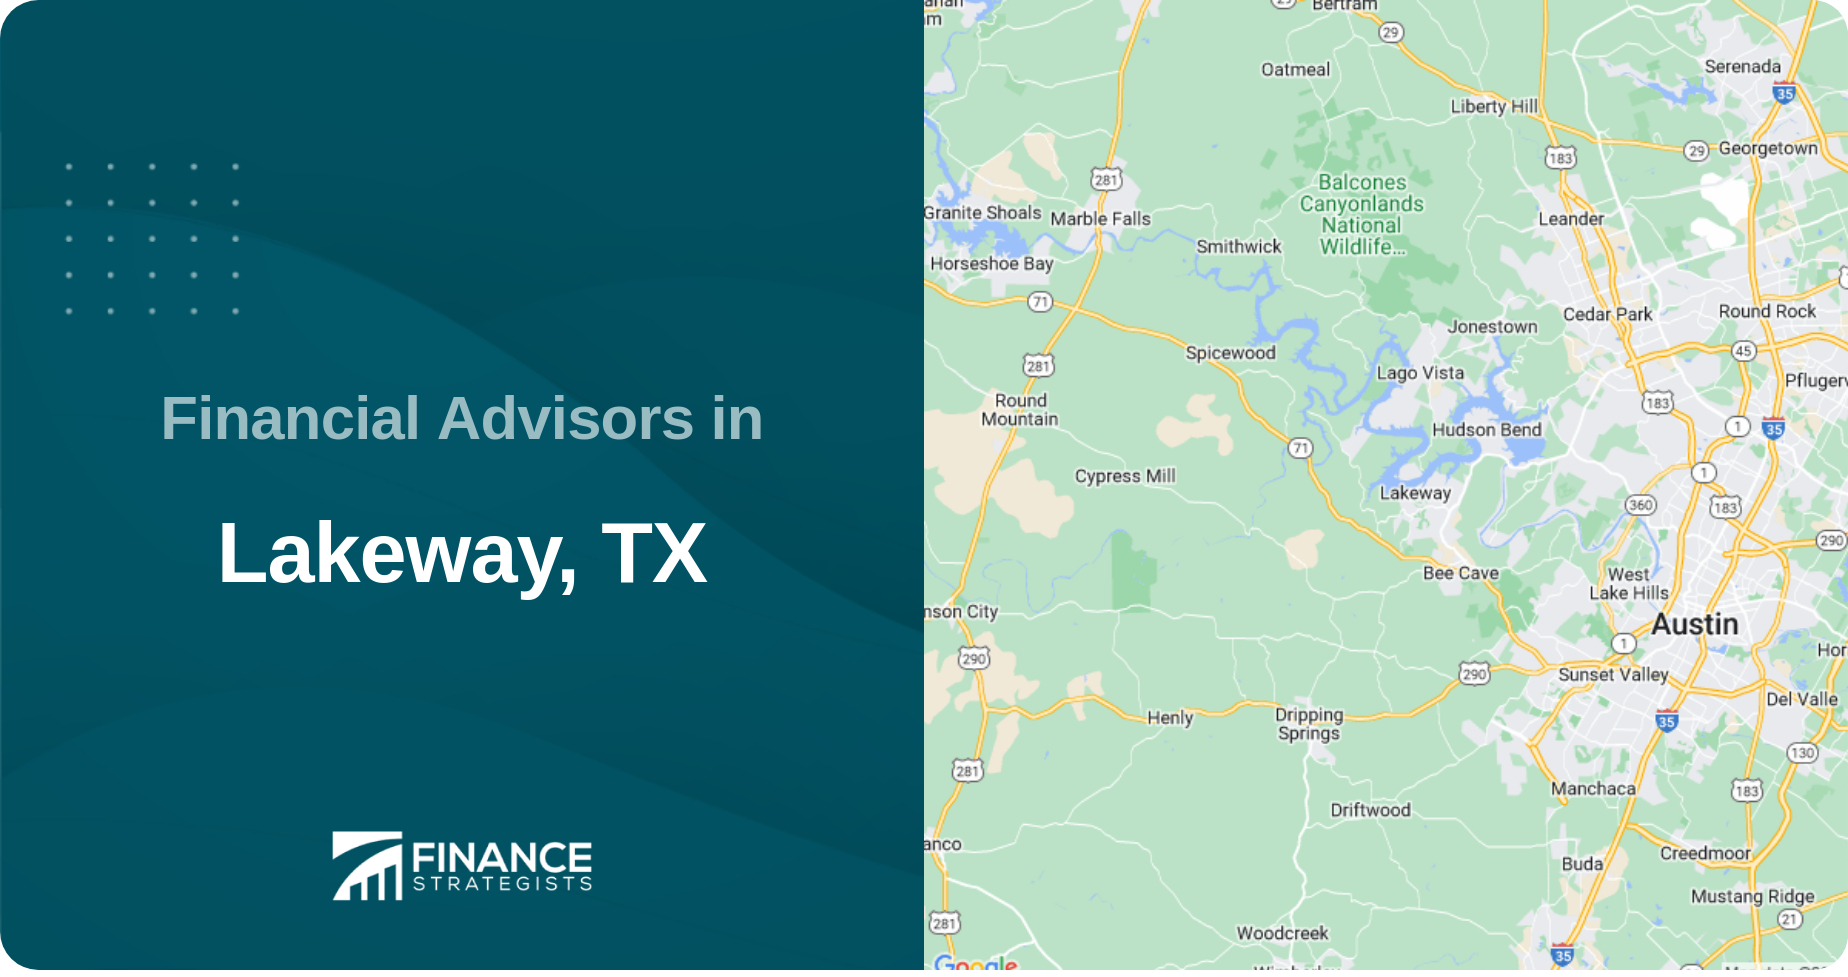 Financial Advisors in Lakeway, TX